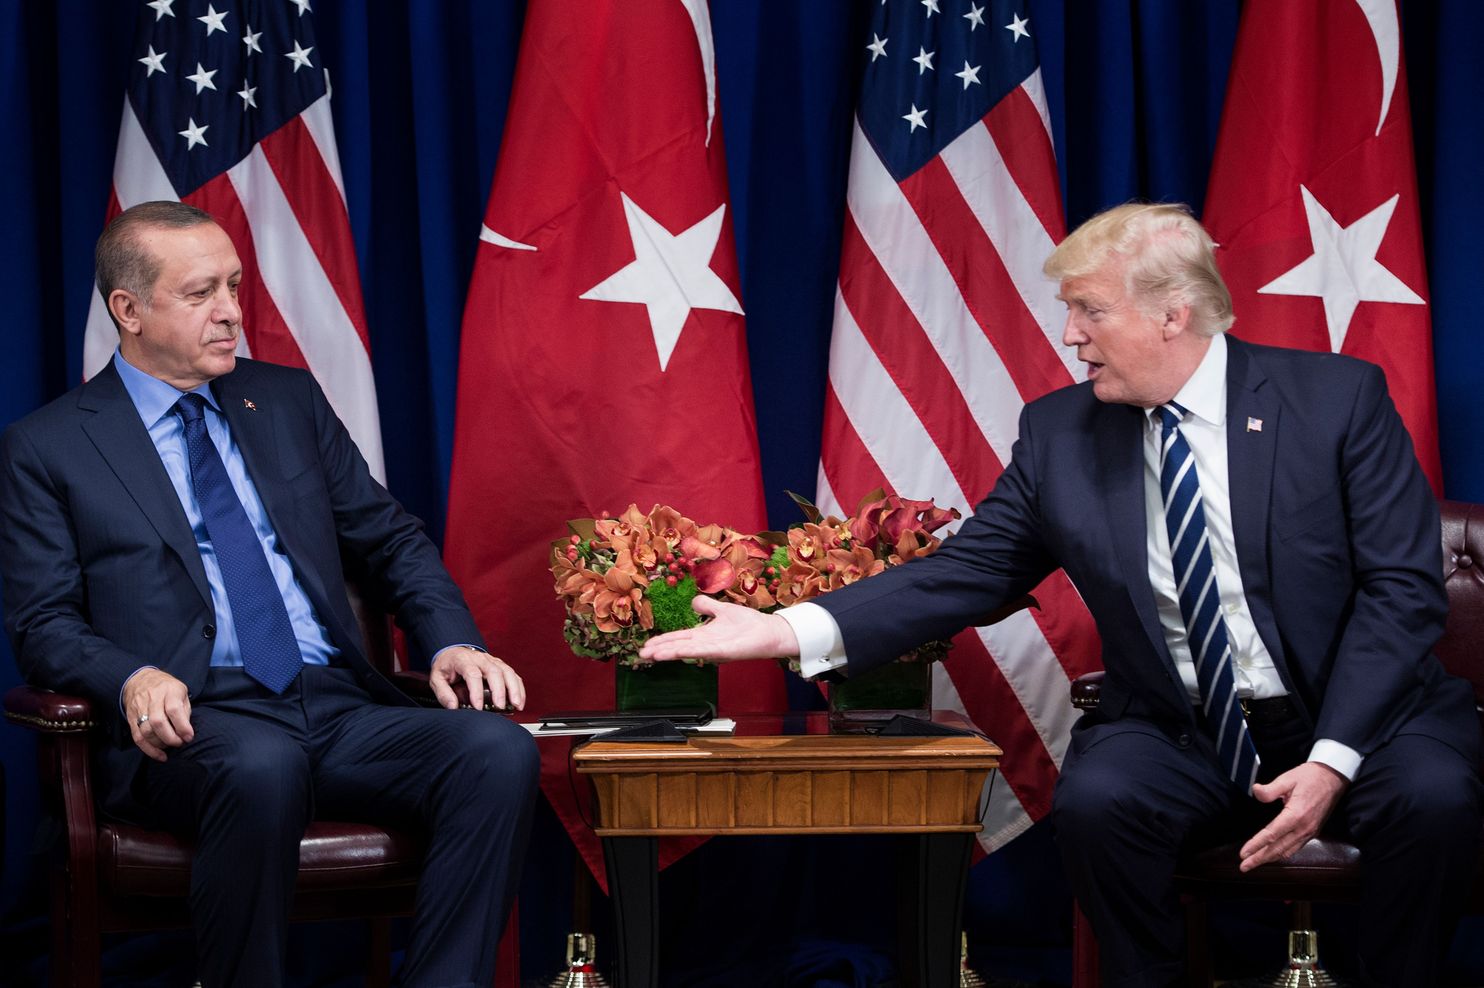 O Ρ.Τ.Ερντογάν προανήγγειλε επαναπροσέγγιση με τις ΗΠΑ: «H στρατηγική μας συνεργασία θα επιβιώσει»